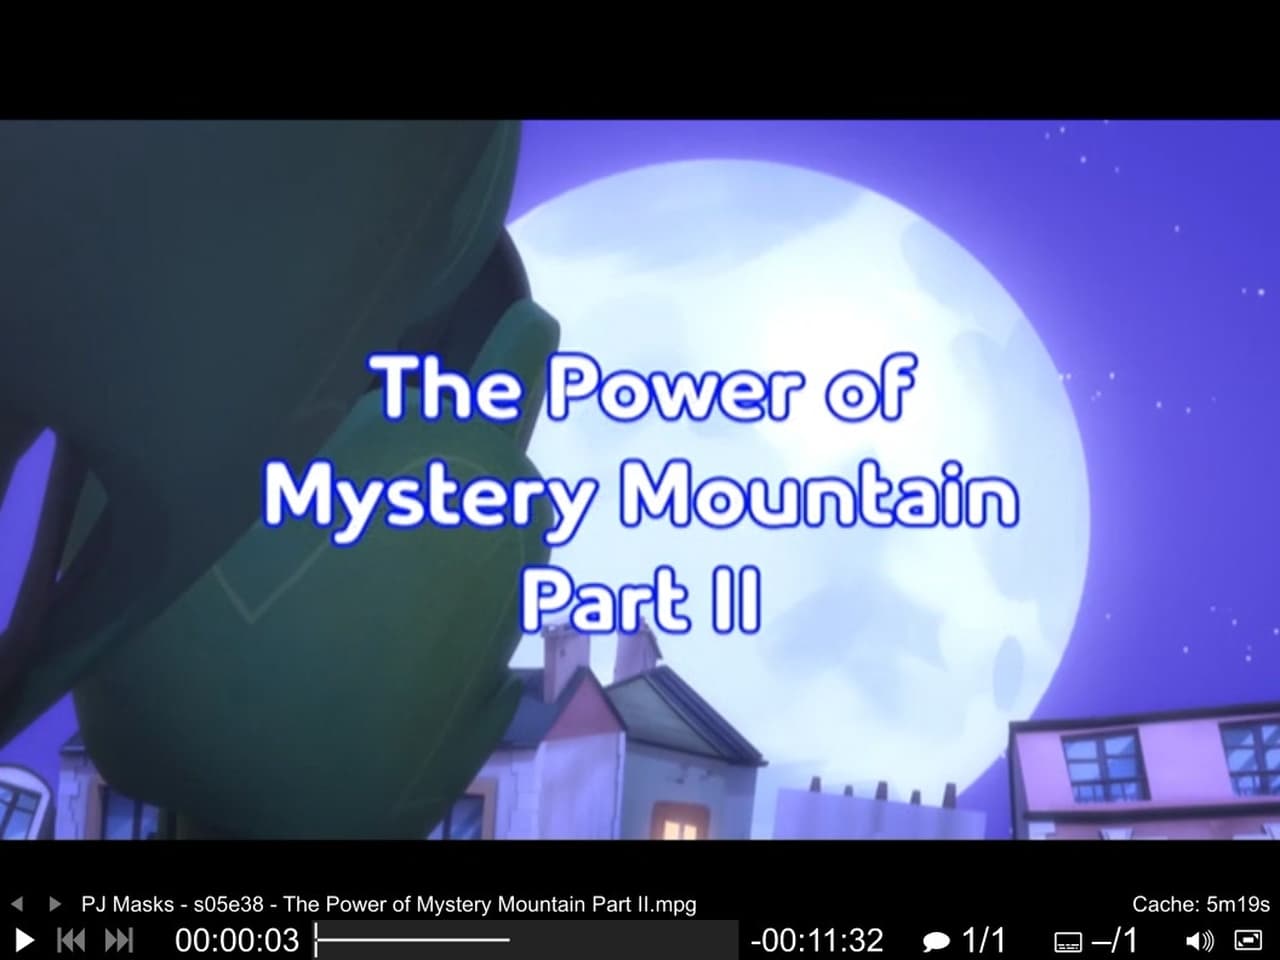 PJ Masks - Season 5 Episode 38 : The Power of Mystery Mountain Part II